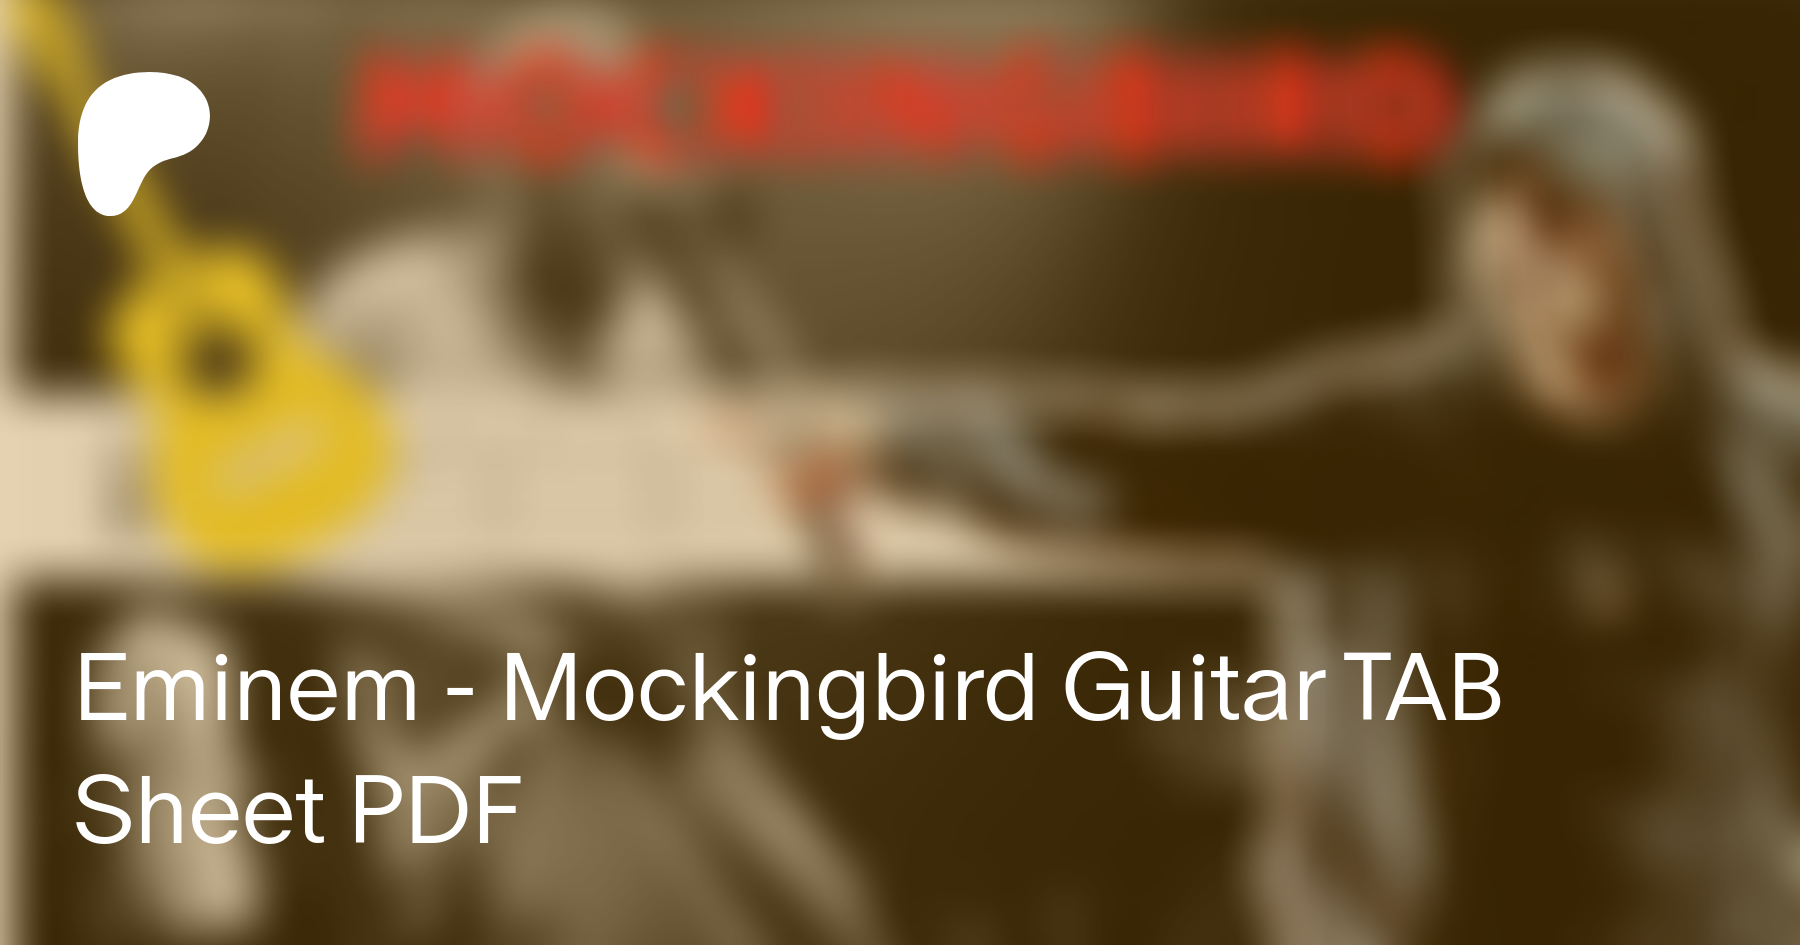 Mockingbird Eminem, PDF